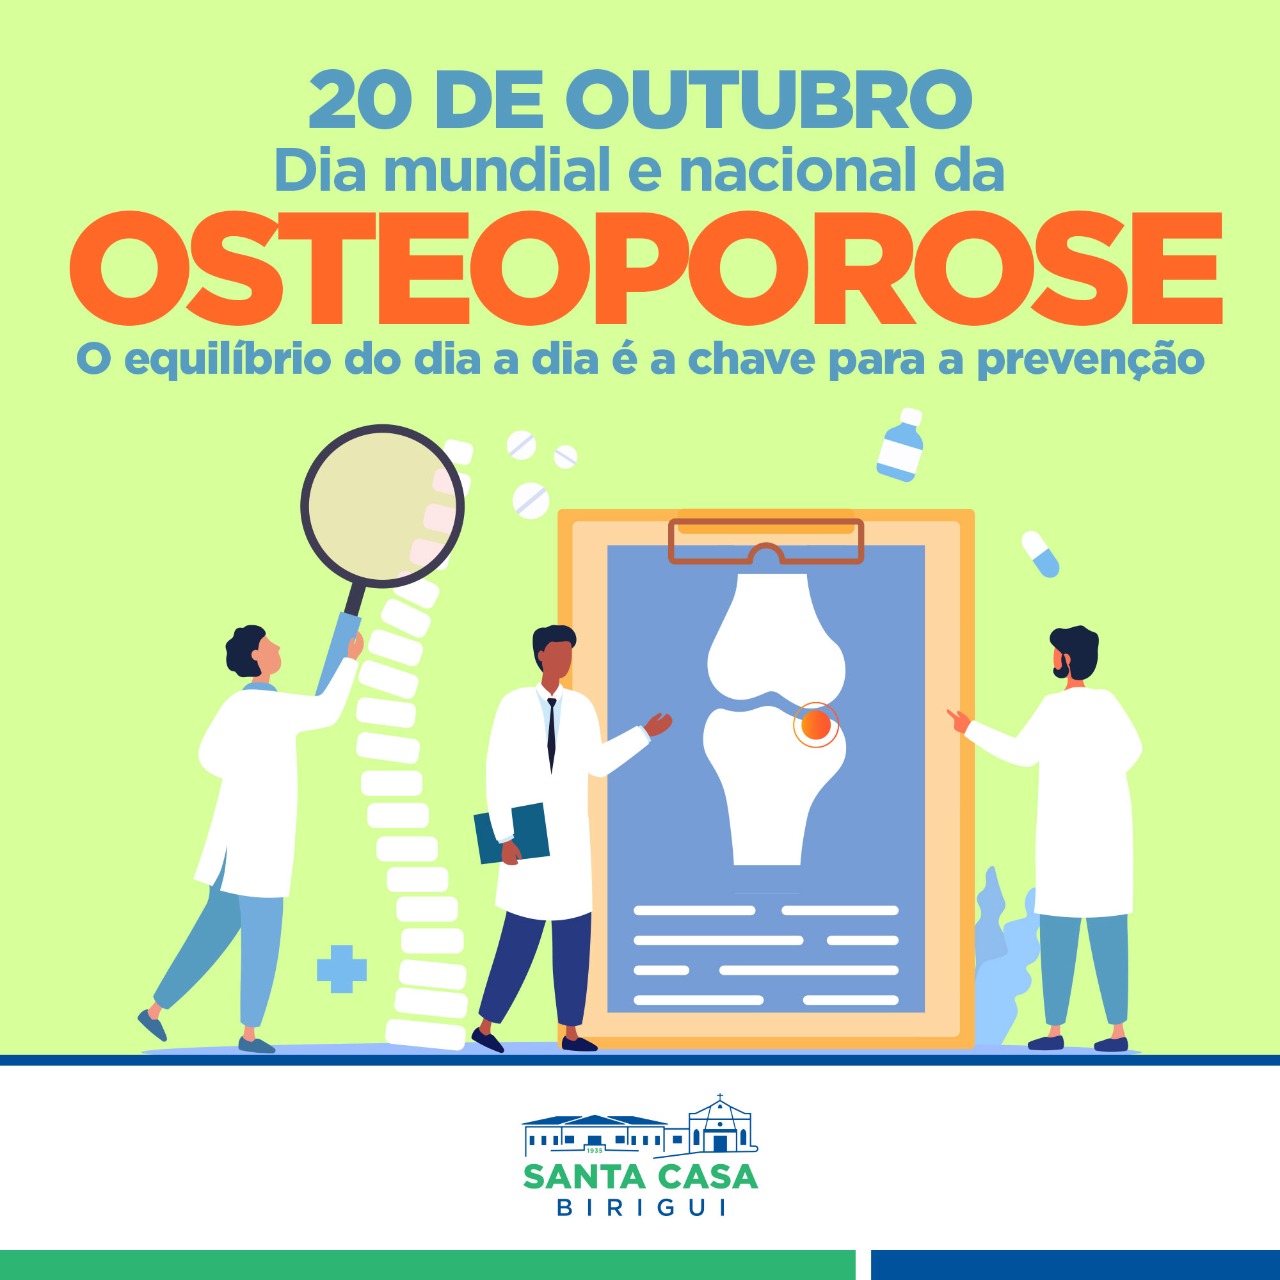 Dia mundial e nacional de combate a osteoporose